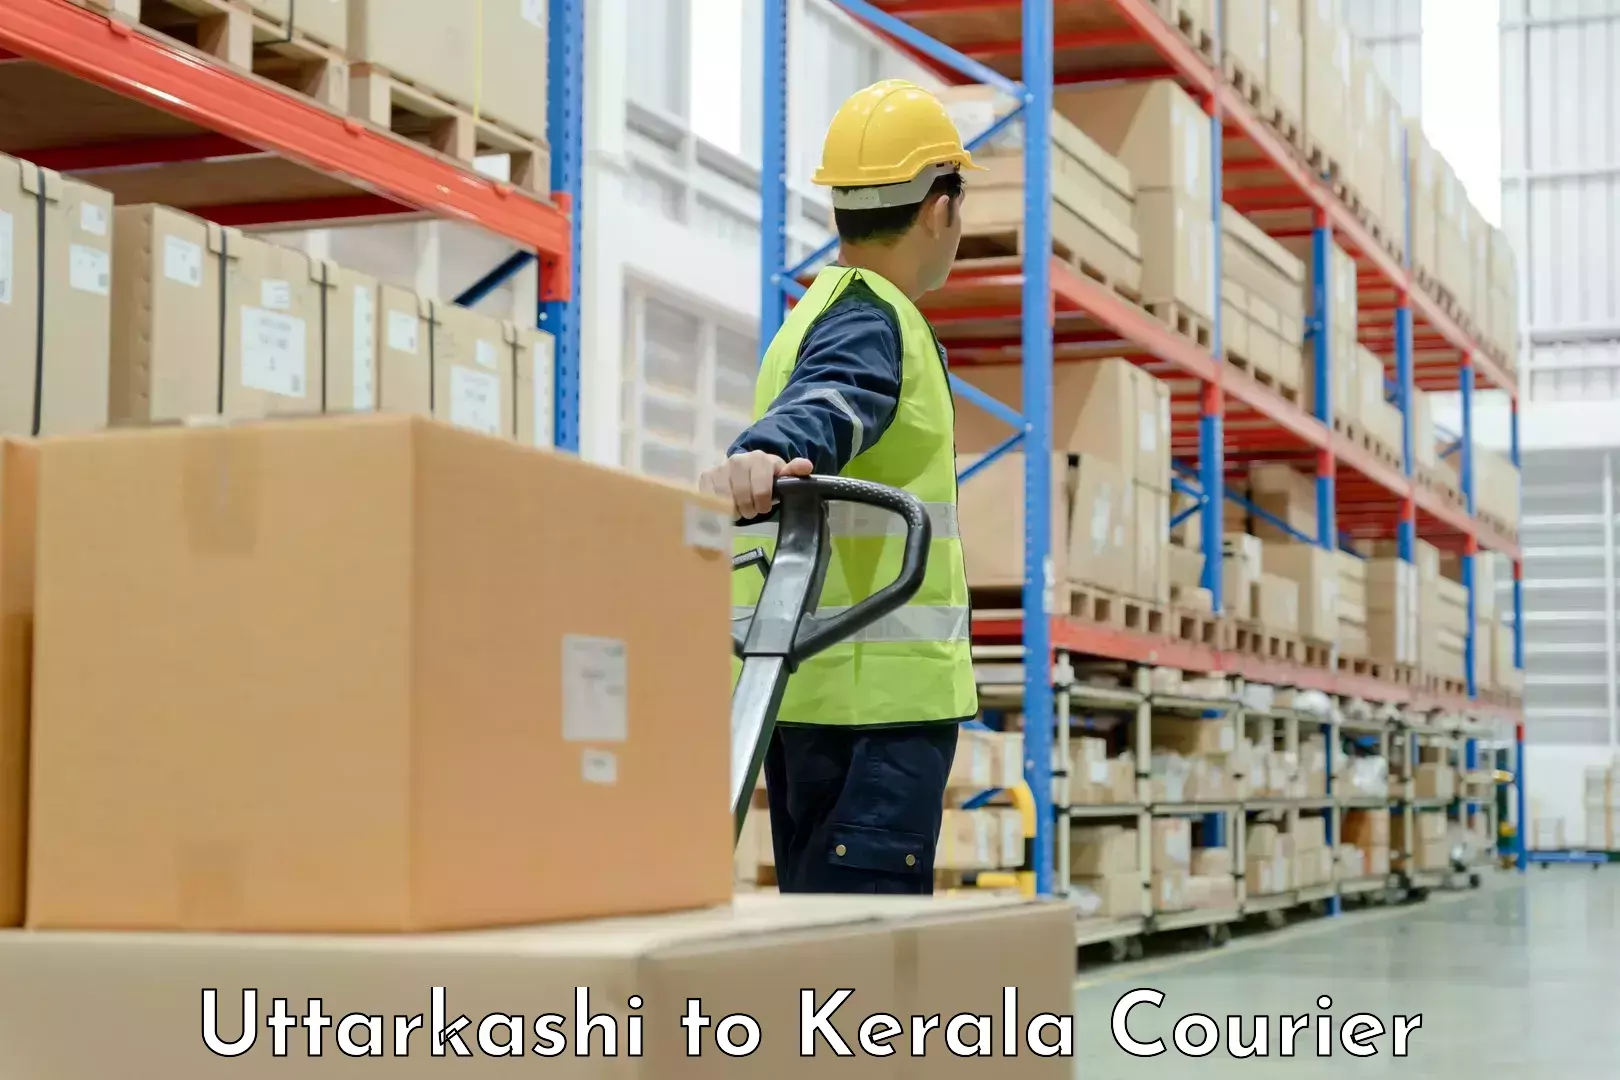 Home moving specialists Uttarkashi to Kerala